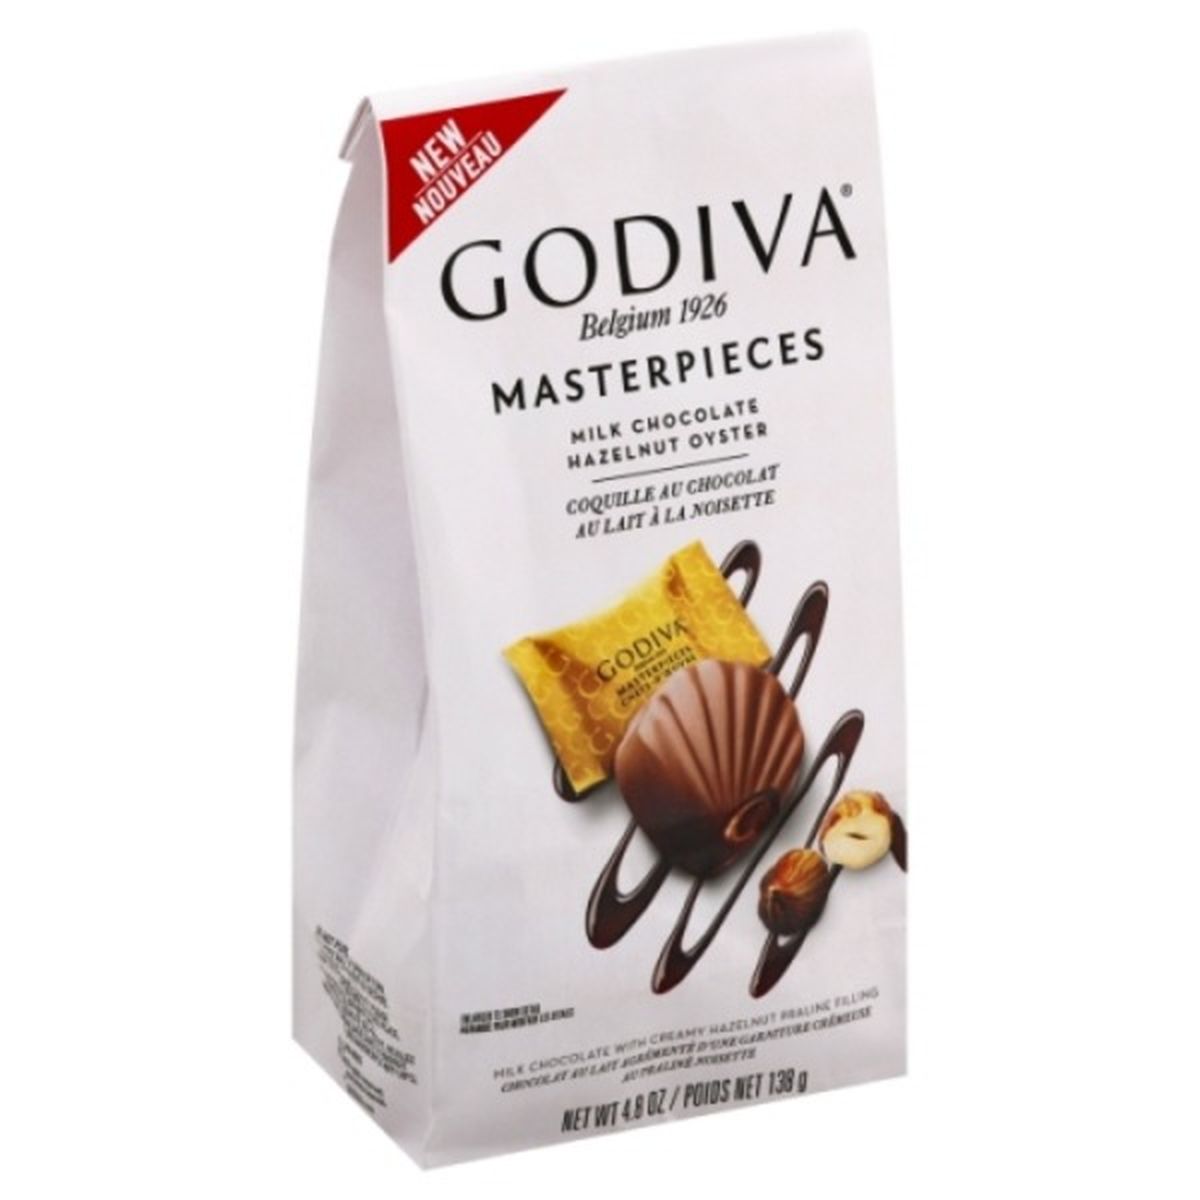 Calories in Godiva Masterpieces Milk Chocolate, Hazelnut Oyster